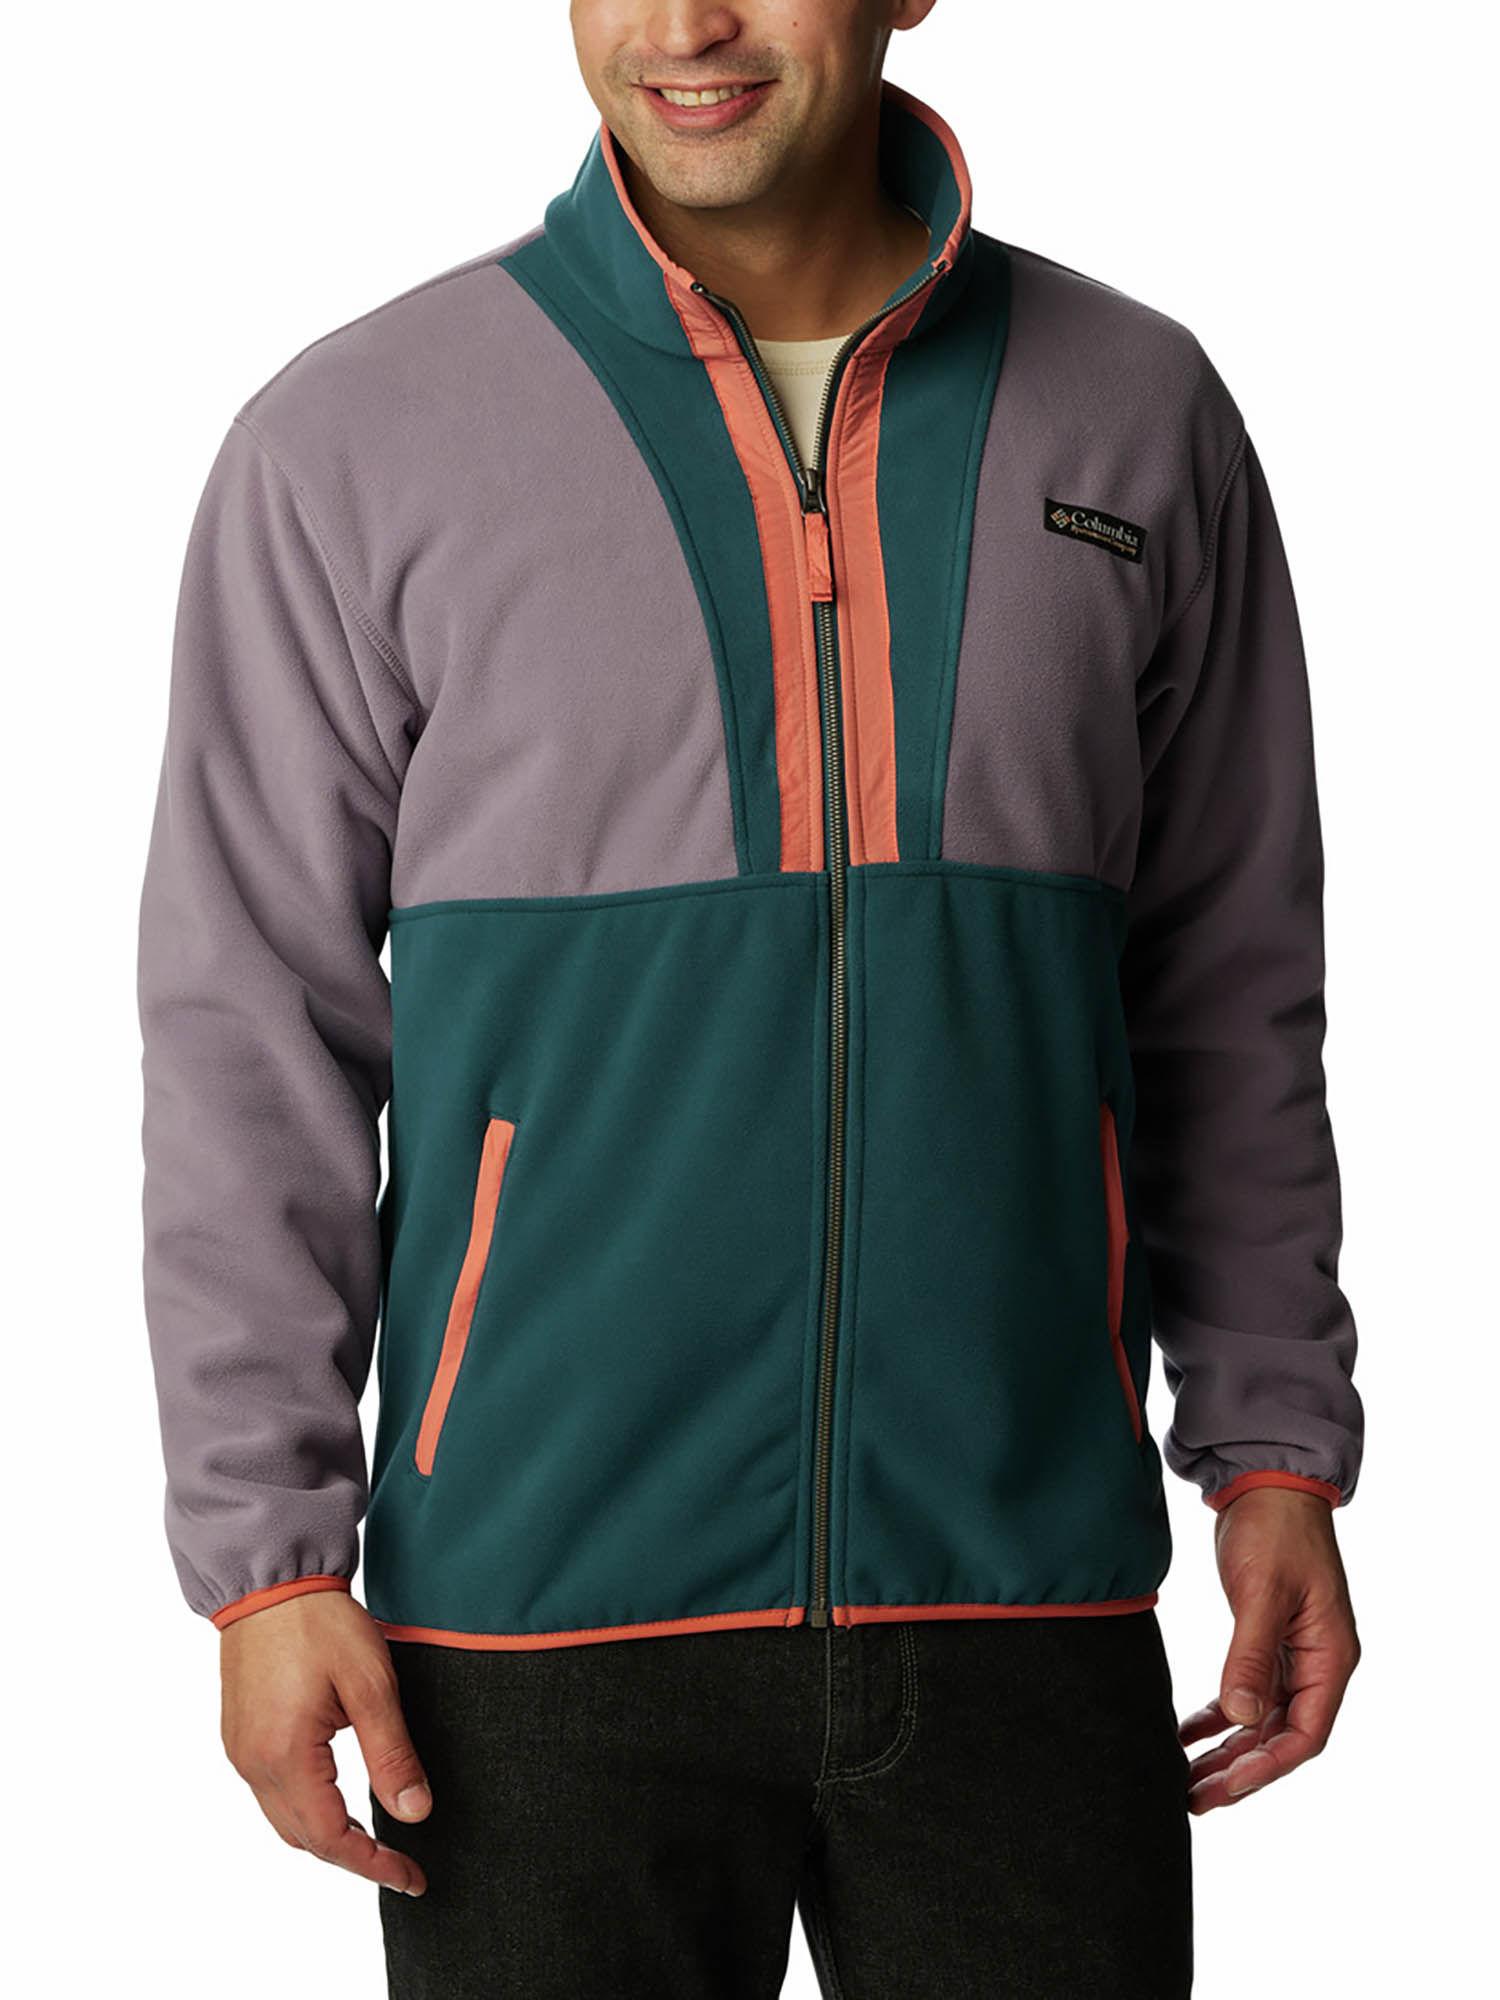 mens-purple-back-bowl-remastered-full-sleeve-trekking-hiking-fleece-jacket